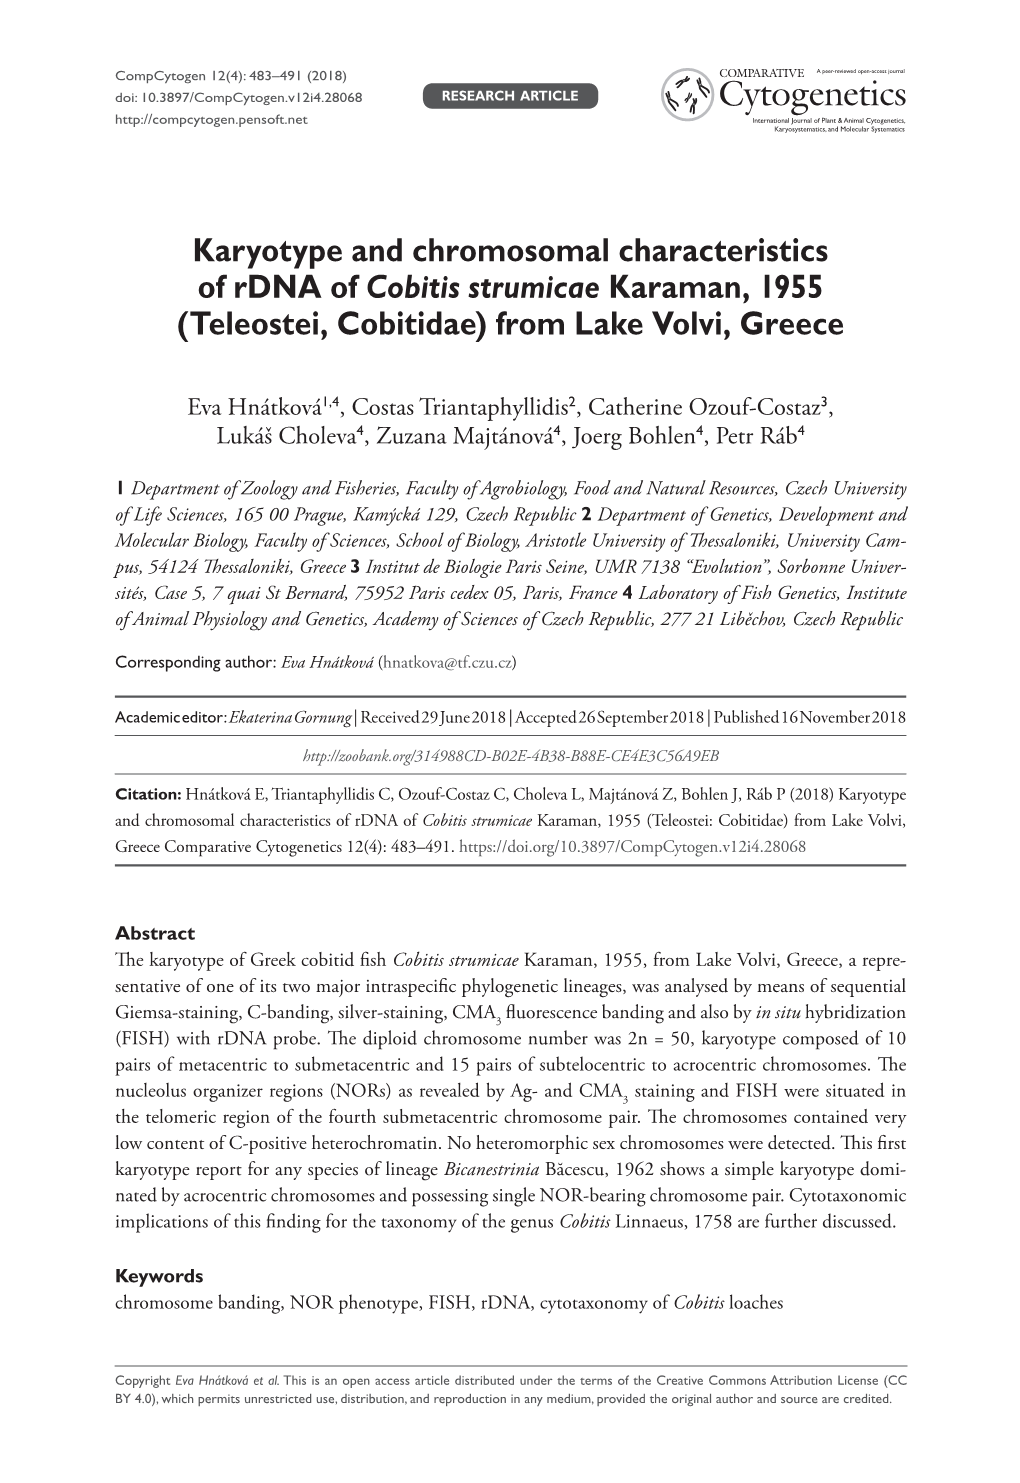 ﻿Karyotype and Chromosomal Characteristics of Rdna of Cobitis